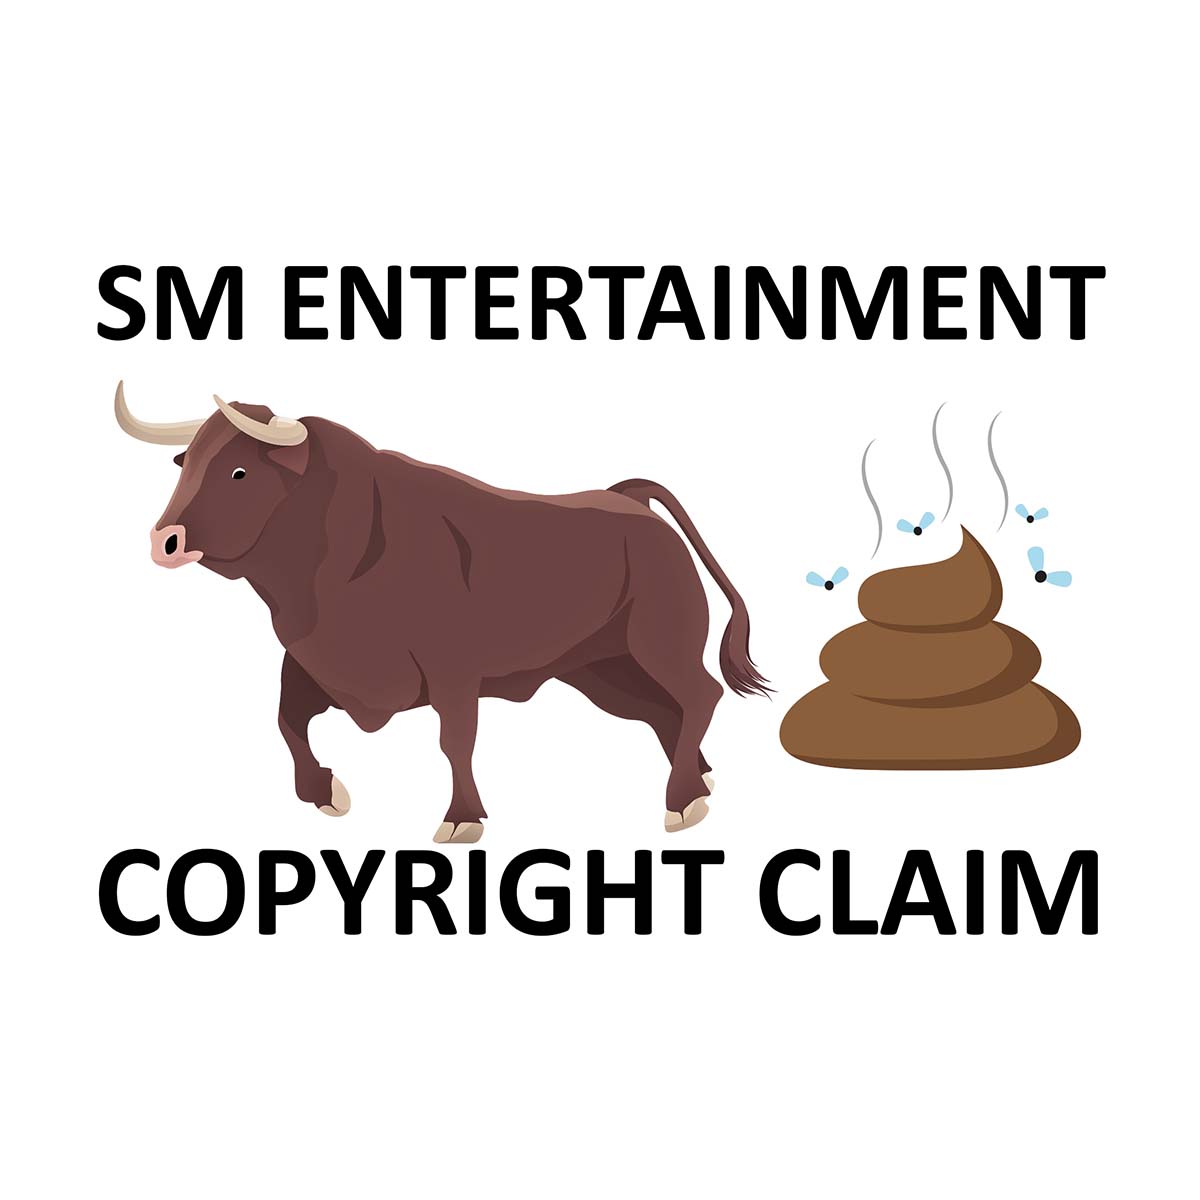 🐮💩 Copyright Claim by SM Entertainment